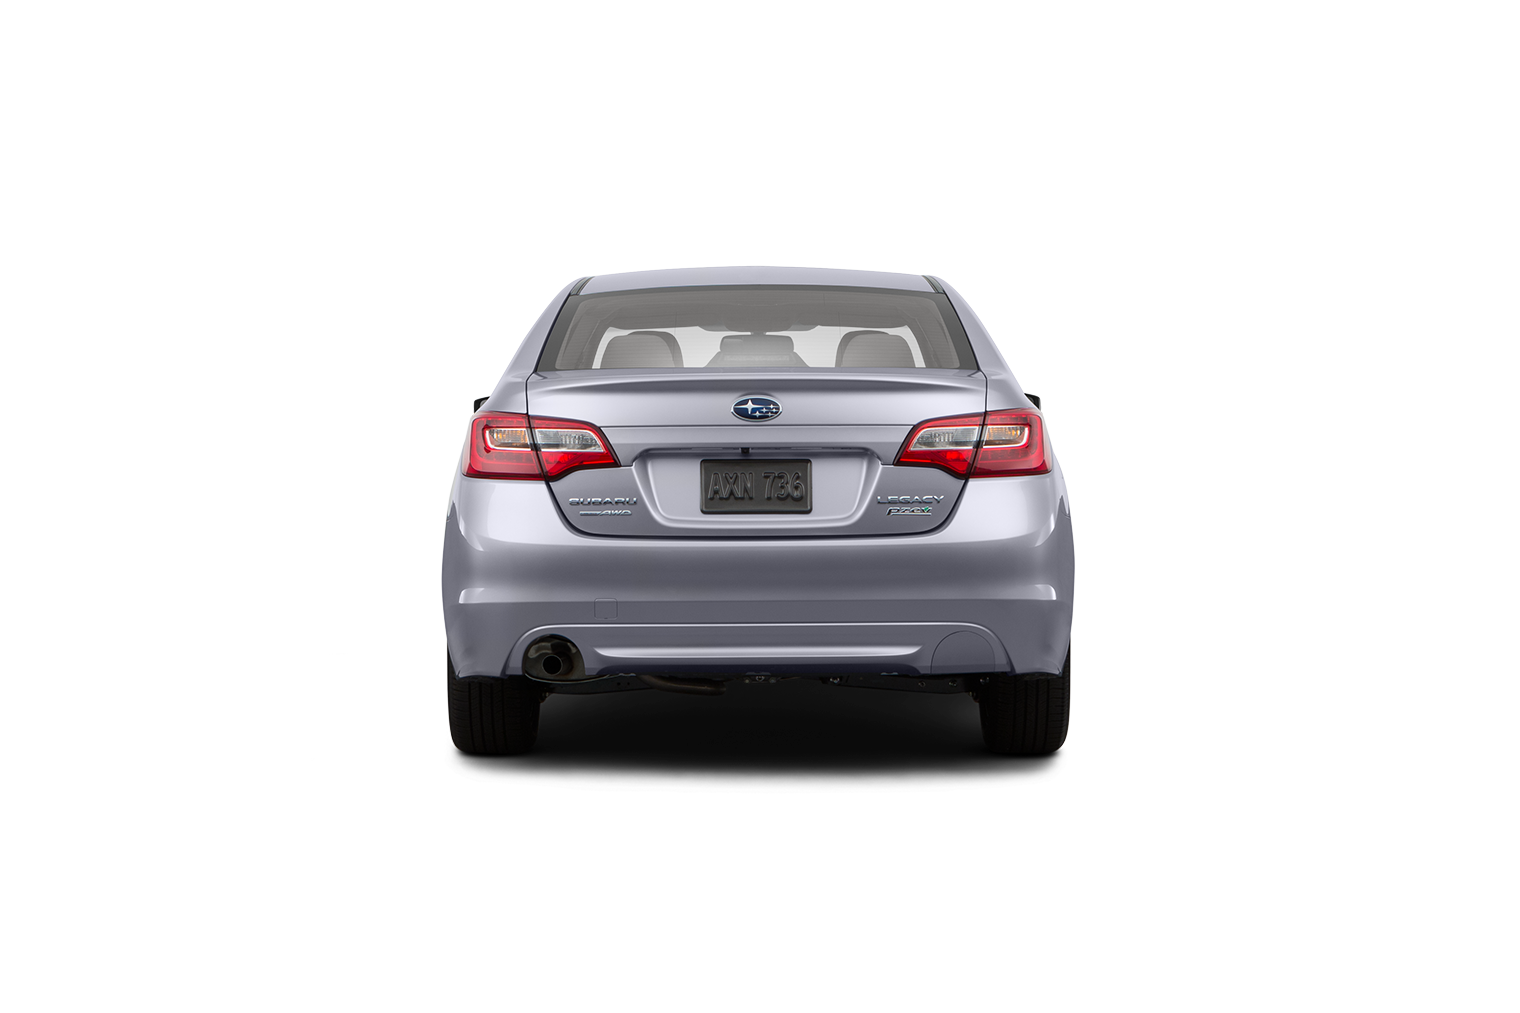 Subaru Legacy 2.5i Premium rear view